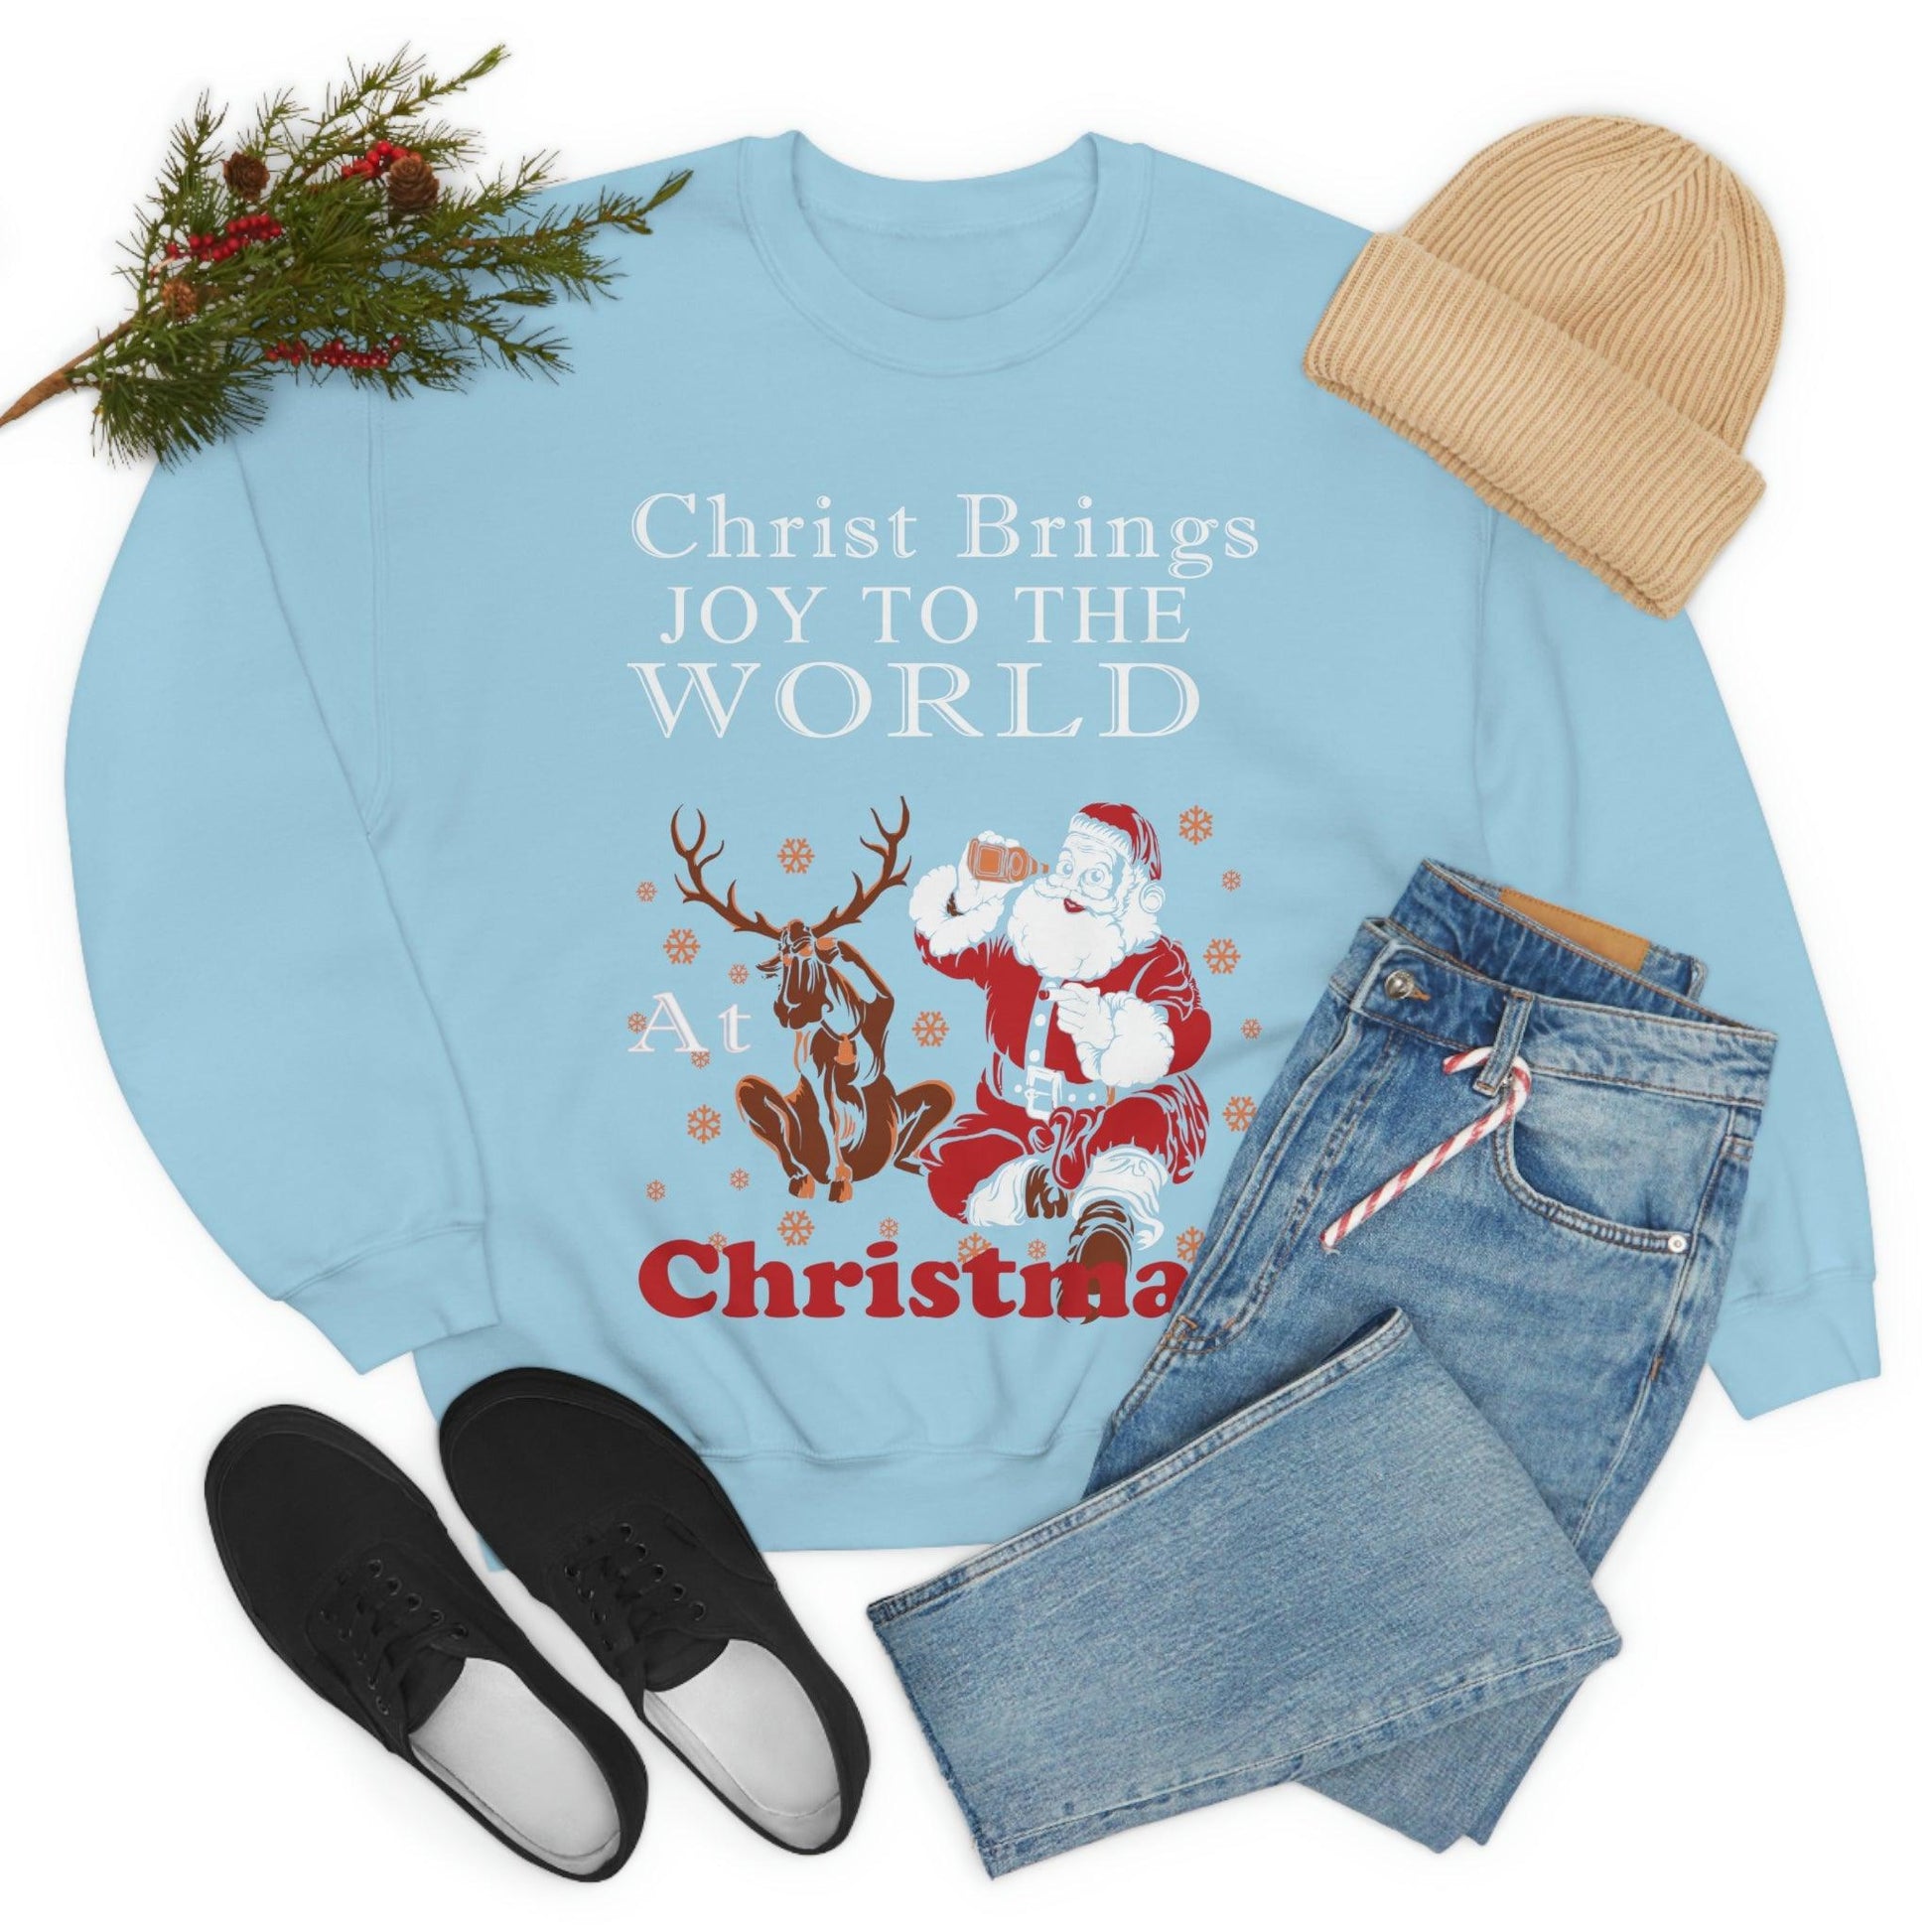 Christ brings joy to the World at Christmas Sweatshirt - Giftsmojo